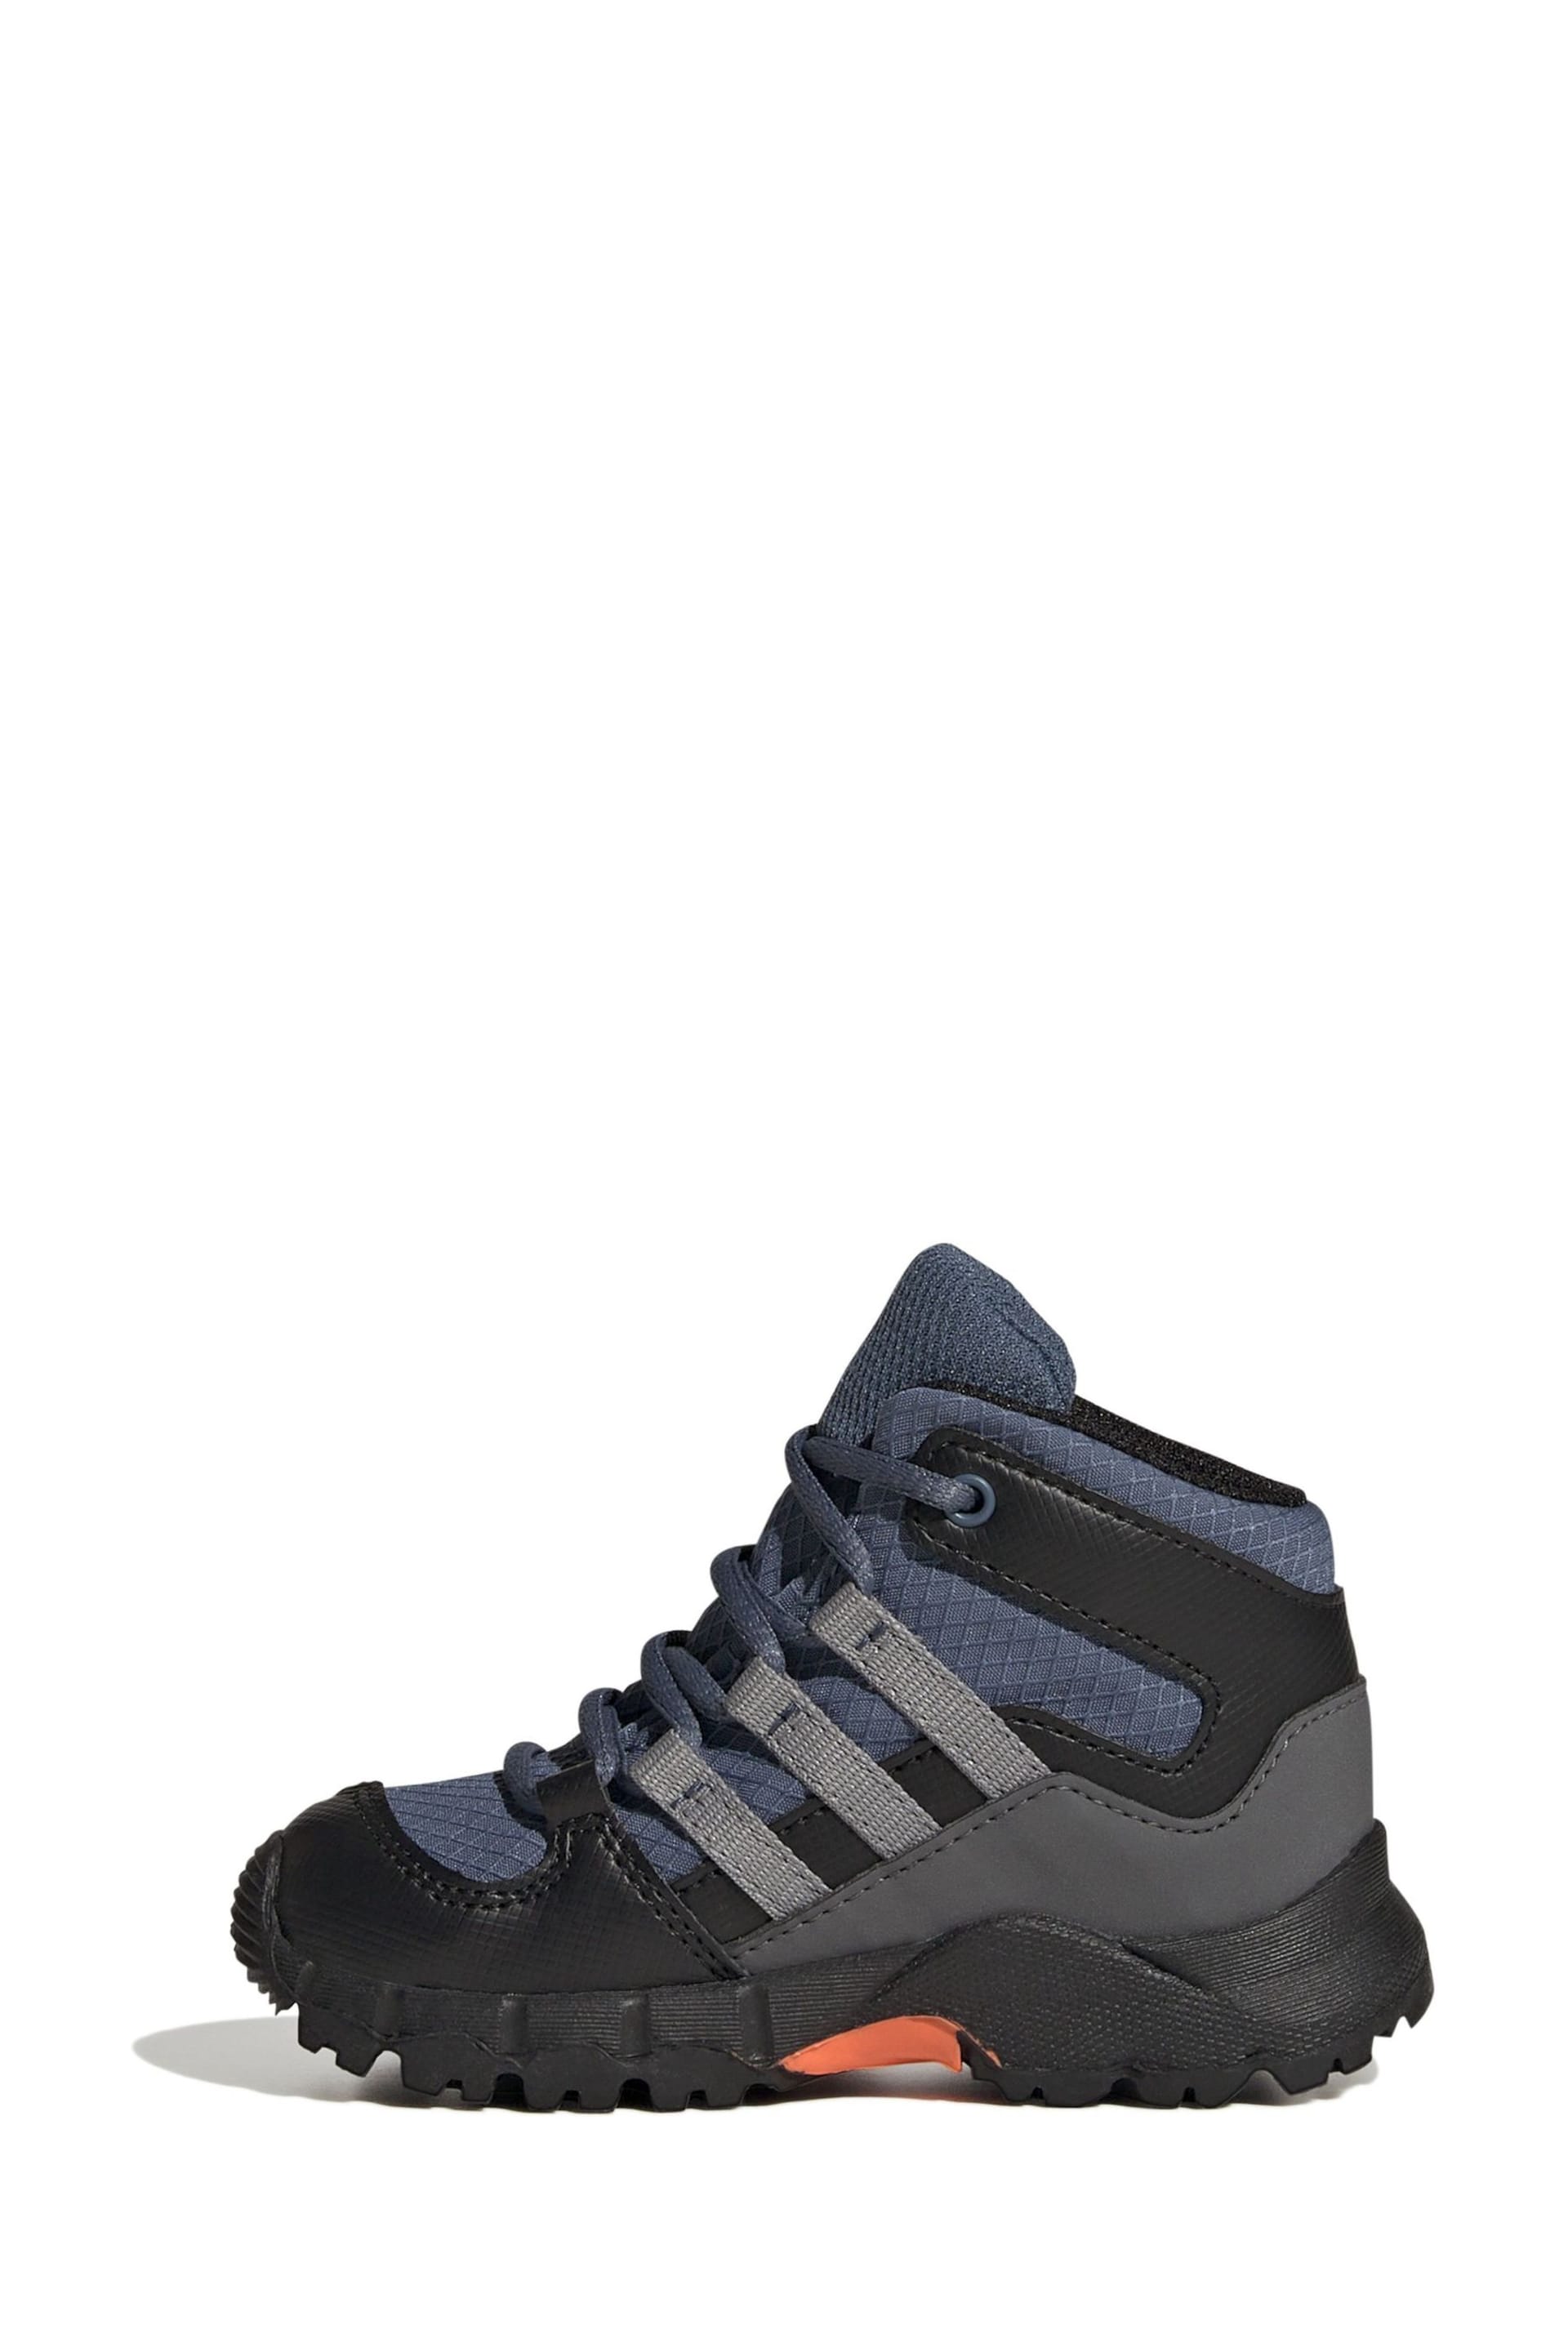 adidas Terrex Mid GTX Hiking Boots - Image 2 of 7